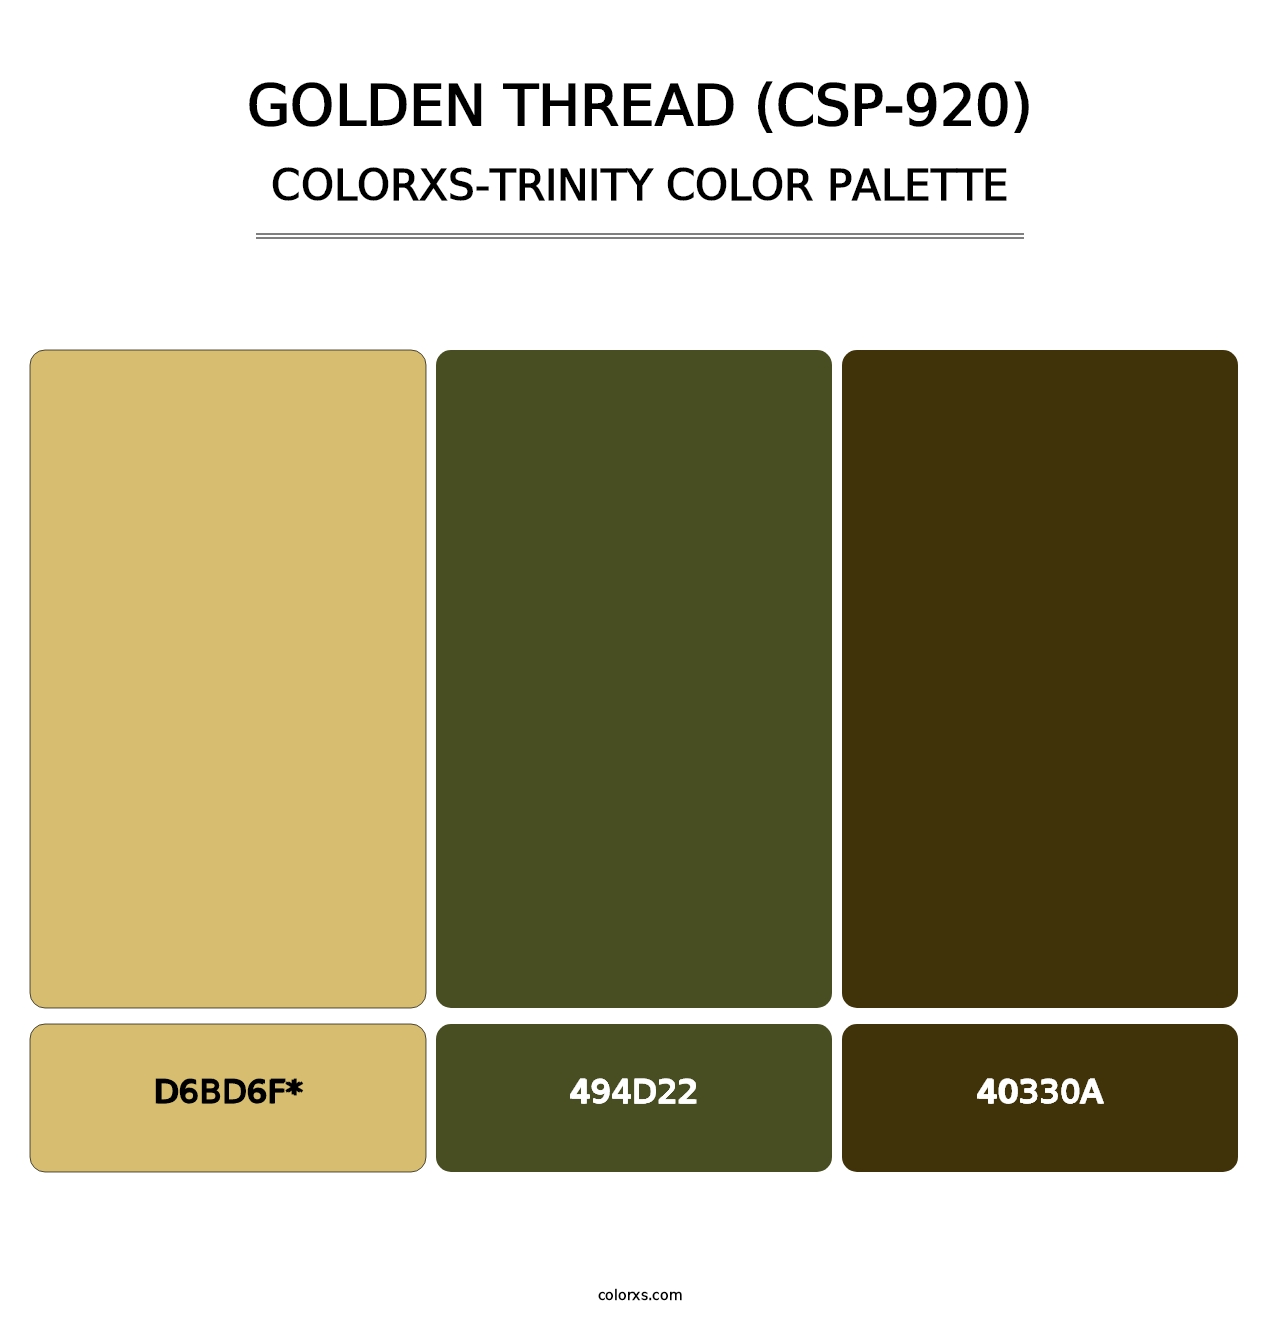 Golden Thread (CSP-920) - Colorxs Trinity Palette